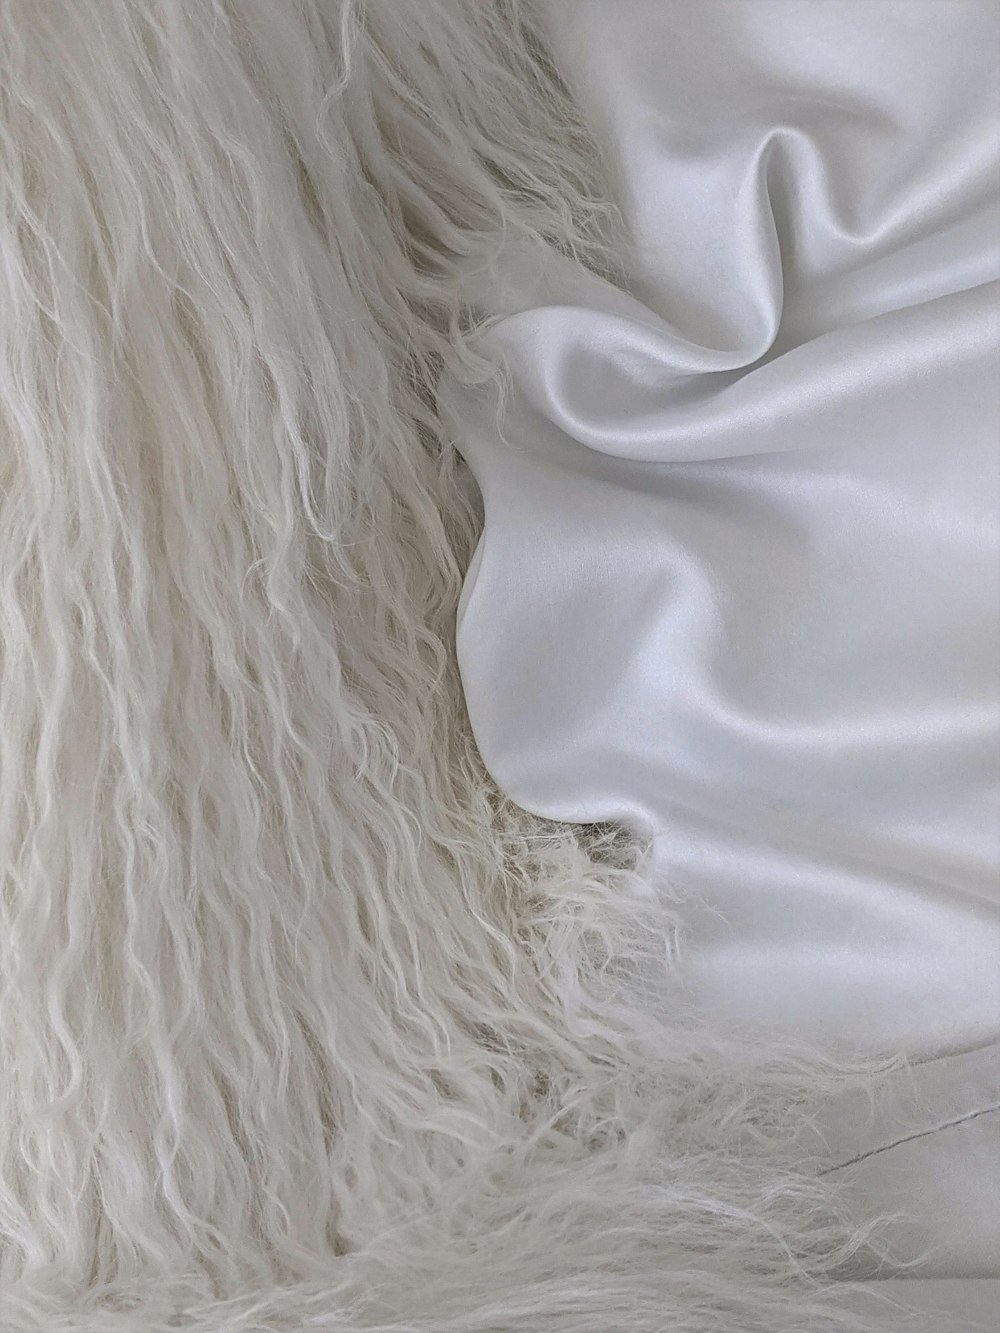 a close up of a white fur coat